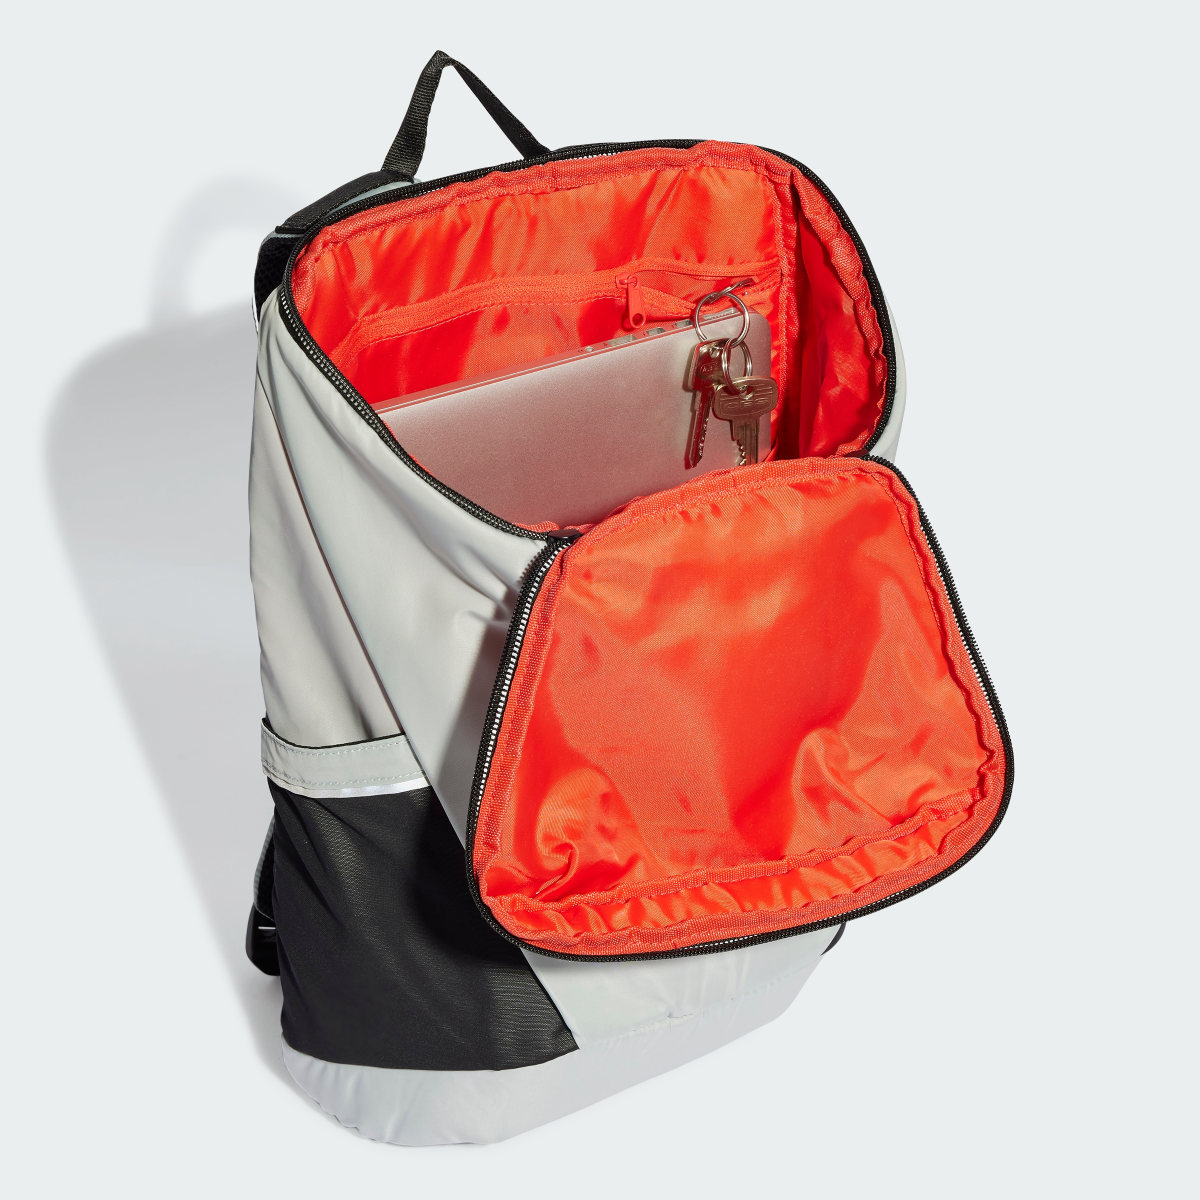 Adidas Gym Backpack. 4